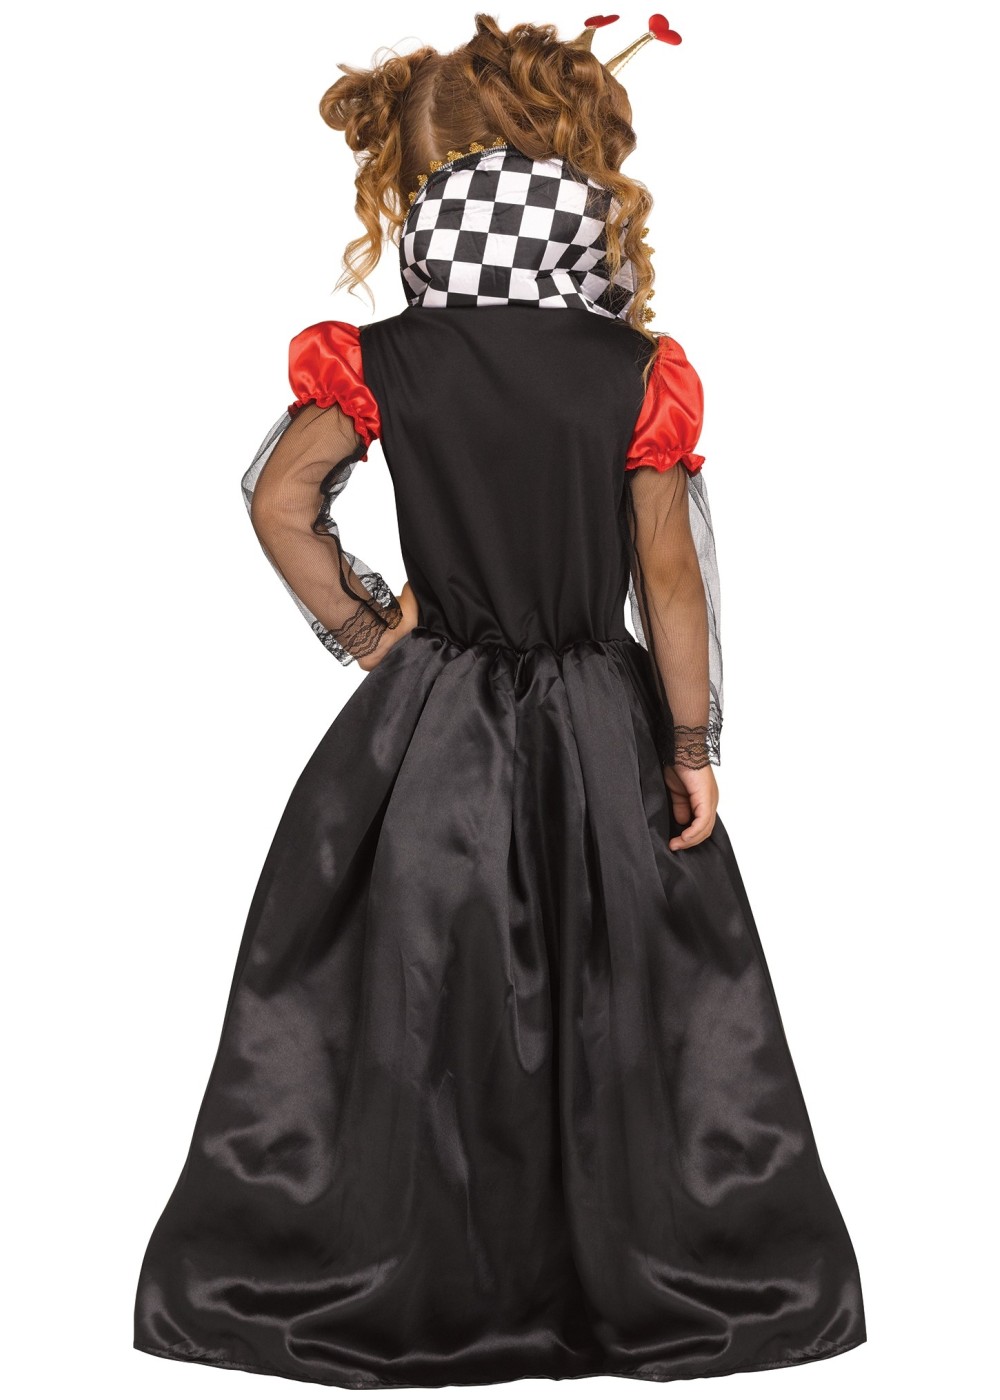 Queen of Hearts Toddler Costume - Disney Costumes